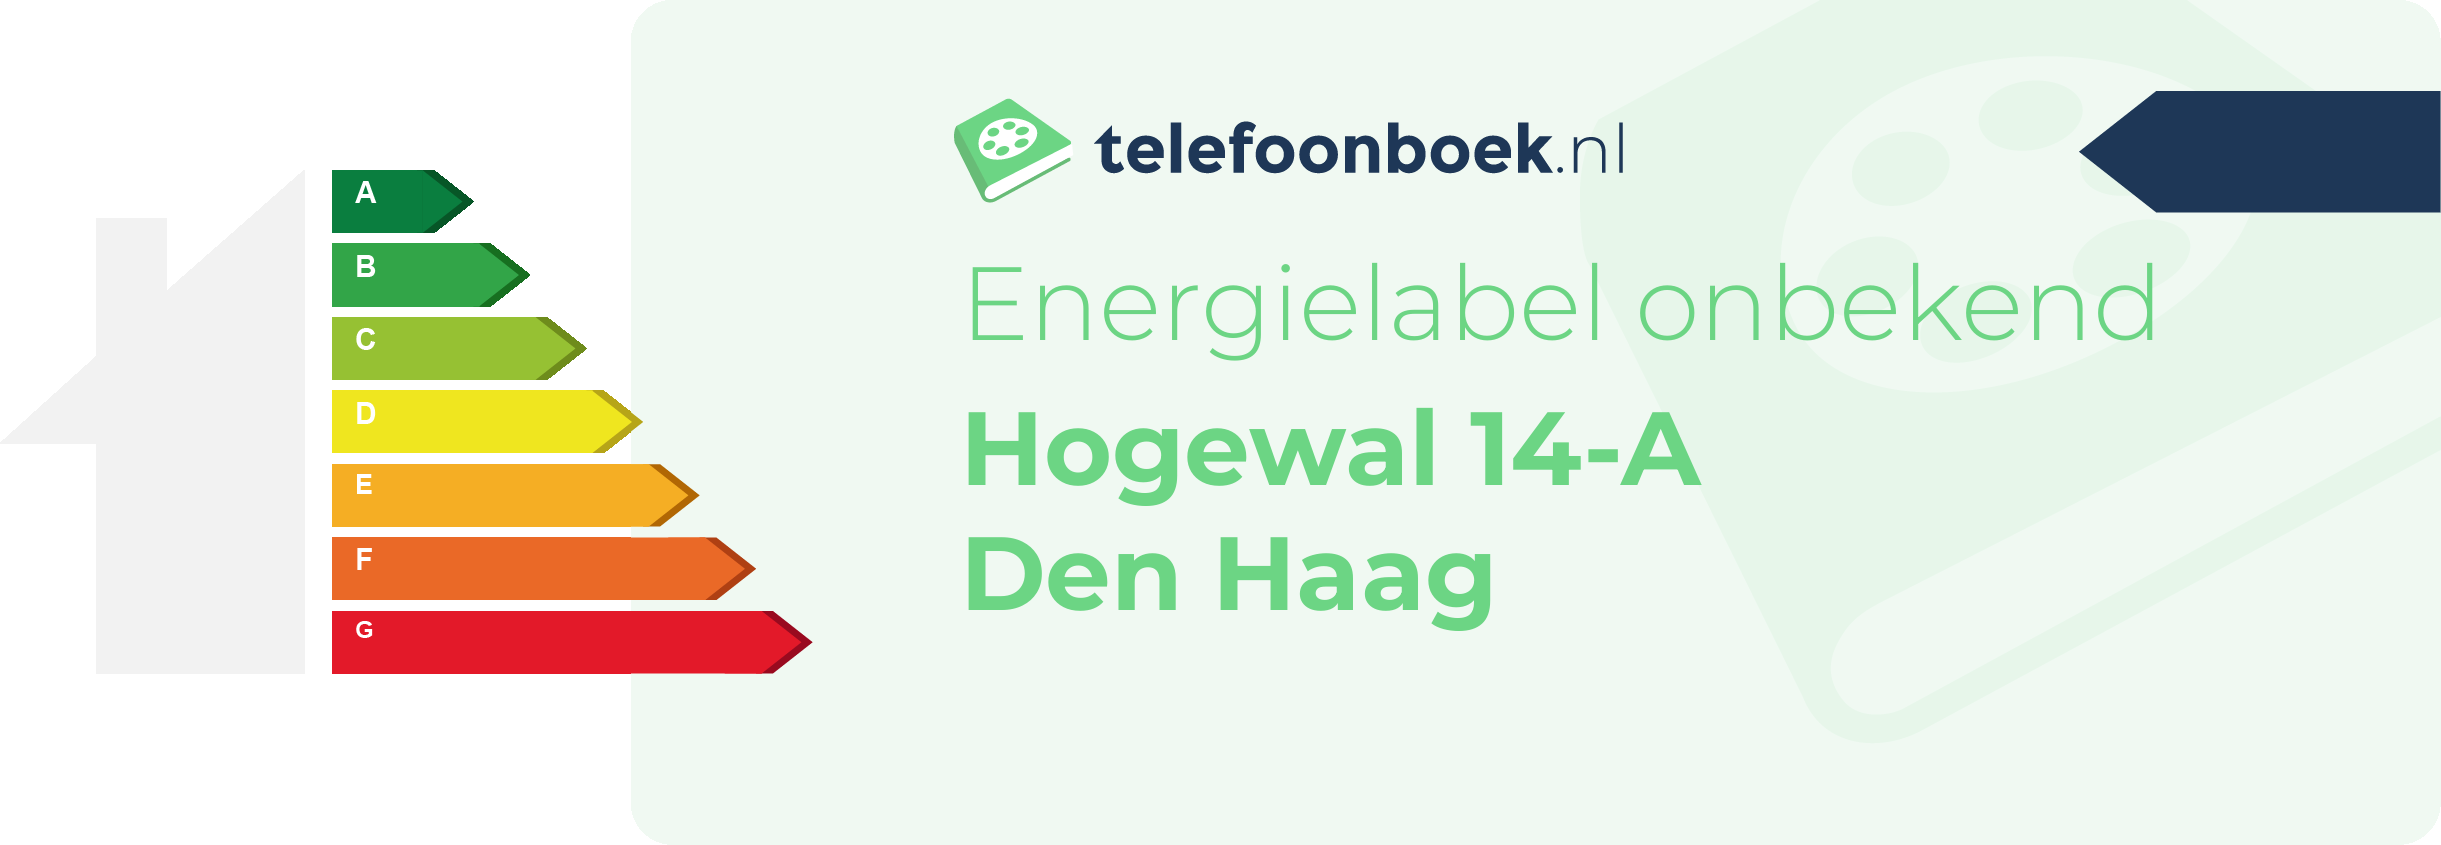 Energielabel Hogewal 14-A Den Haag